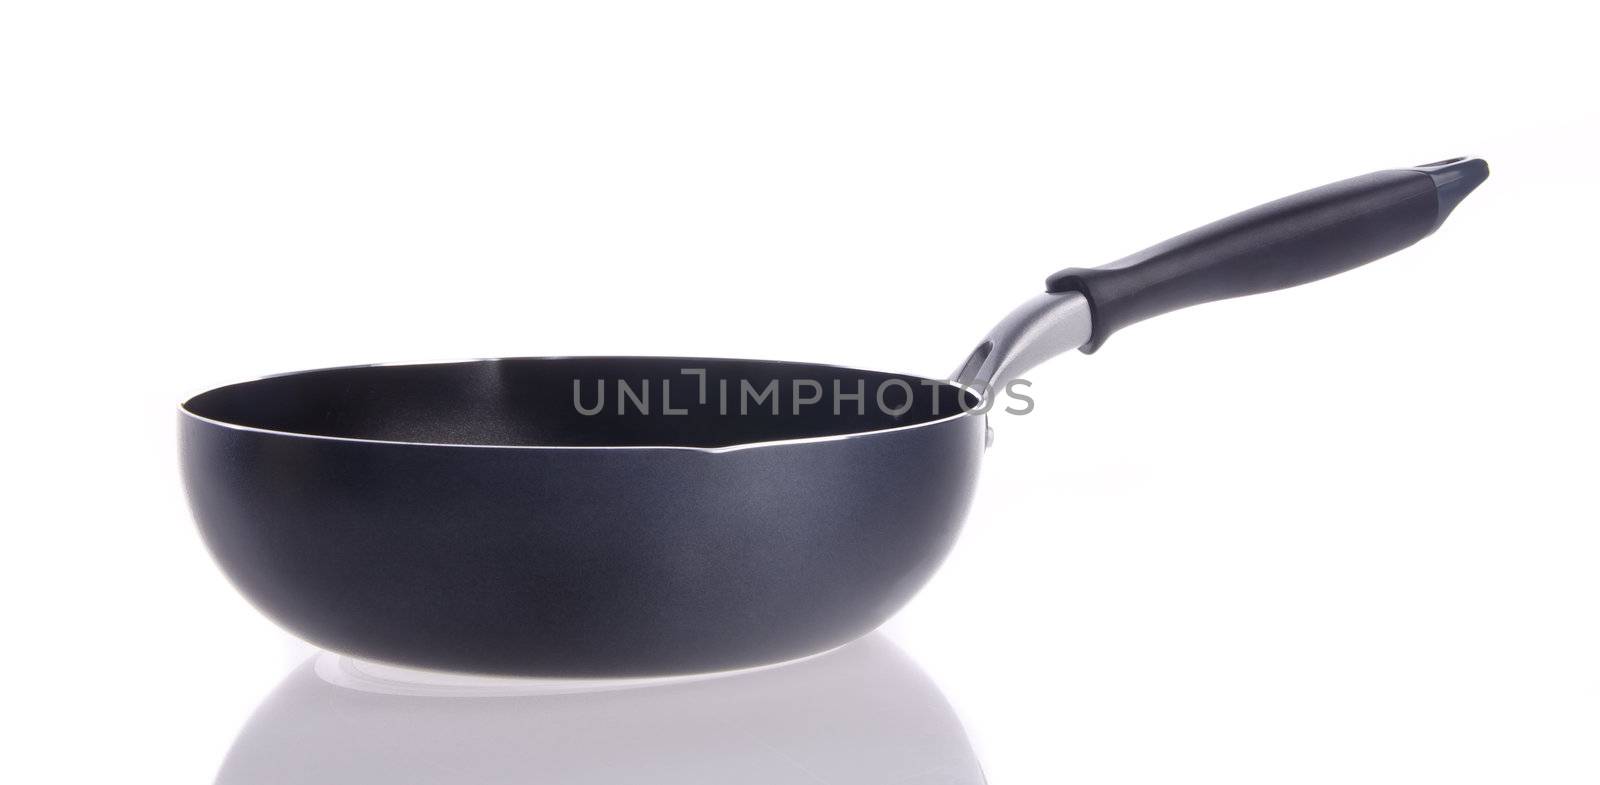 pan, metal frying pan, on a white background